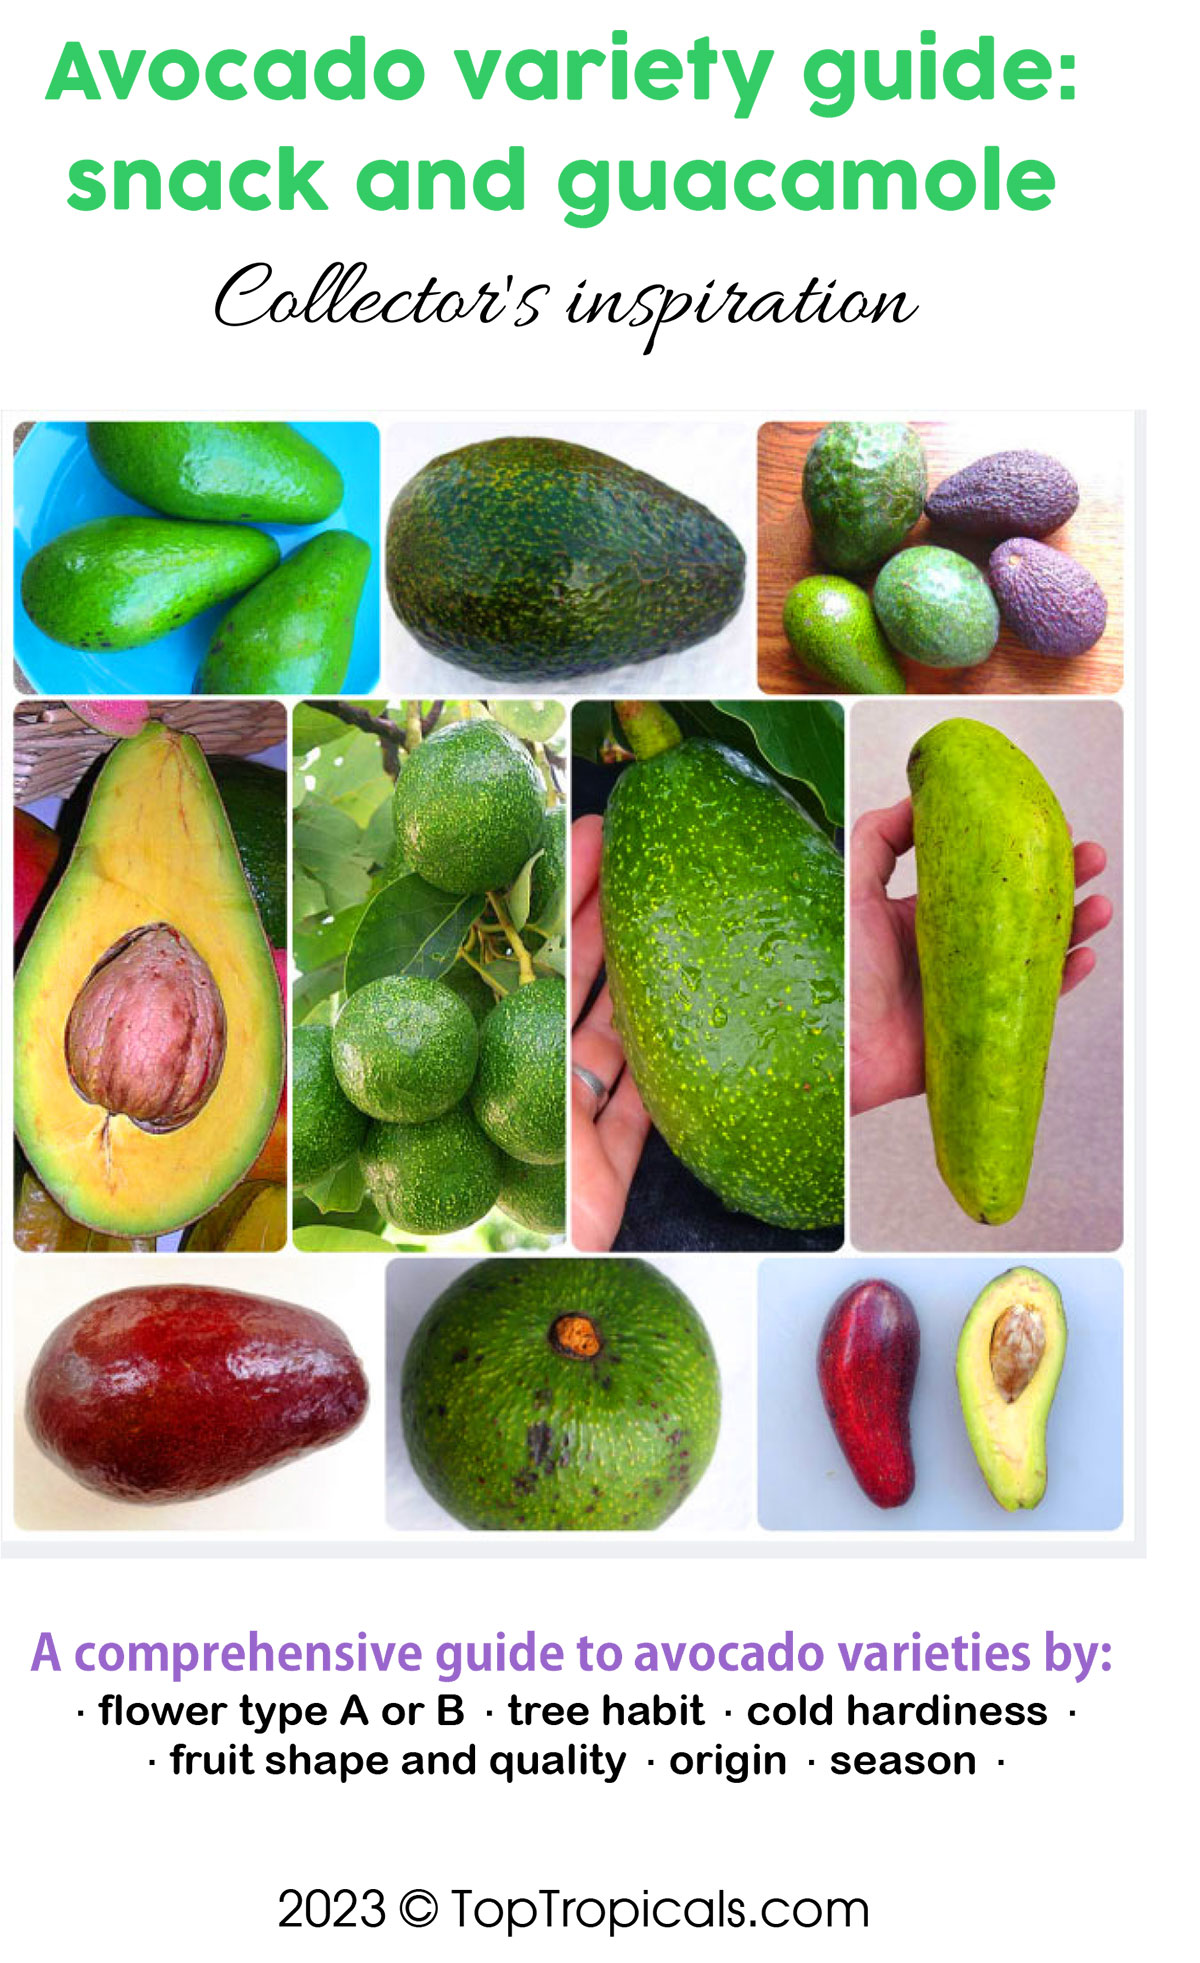 Avocado Variety Guide, book - PDF file download 